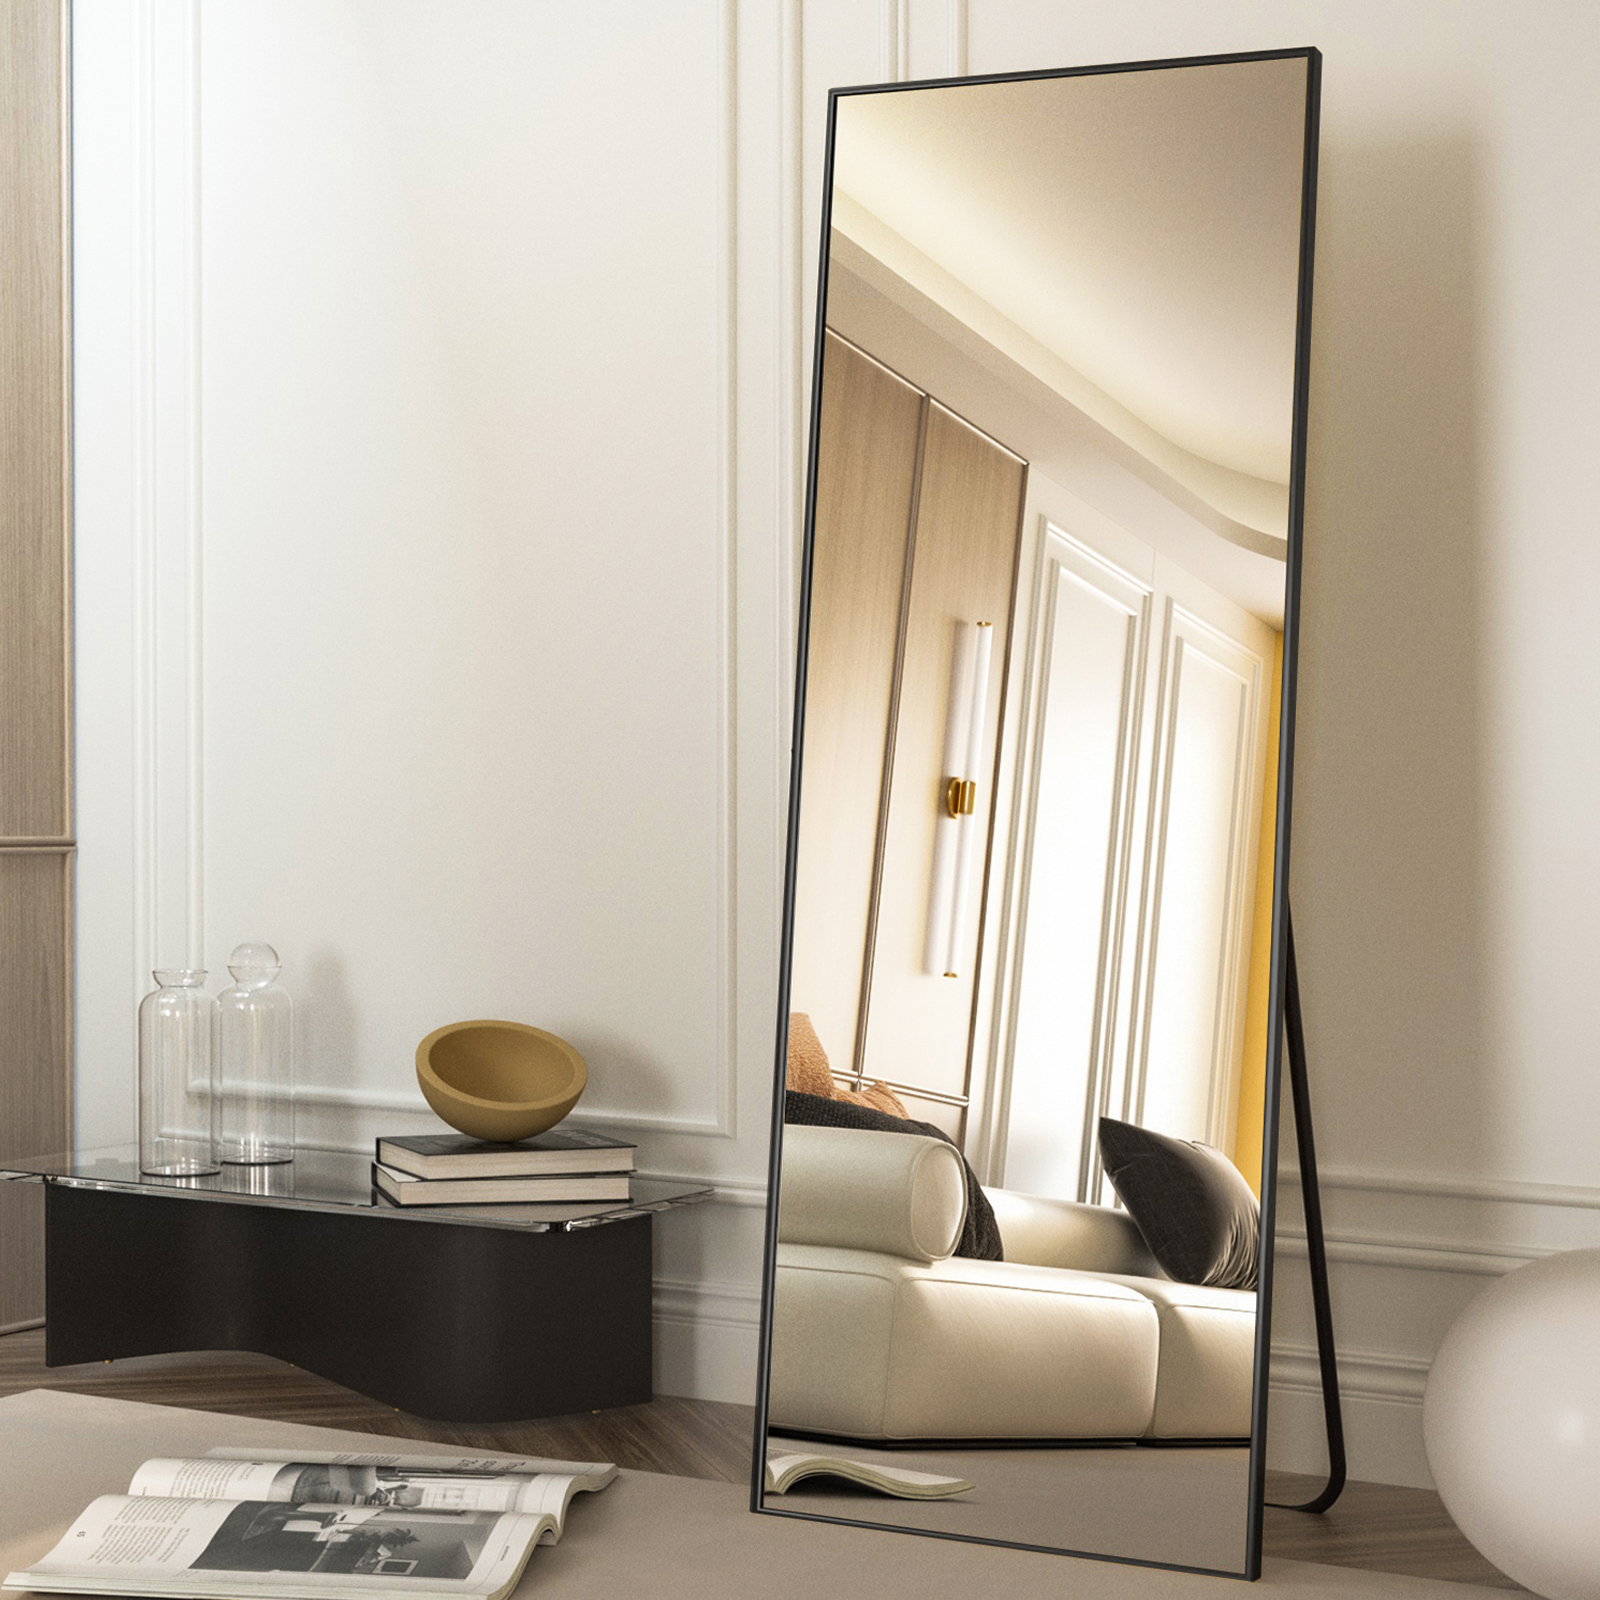 BEAUTYPEAK 64"x21" Full Length Mirror Rectangle Body Dressing Floor Standing Mirrors, Black - image 3 of 8